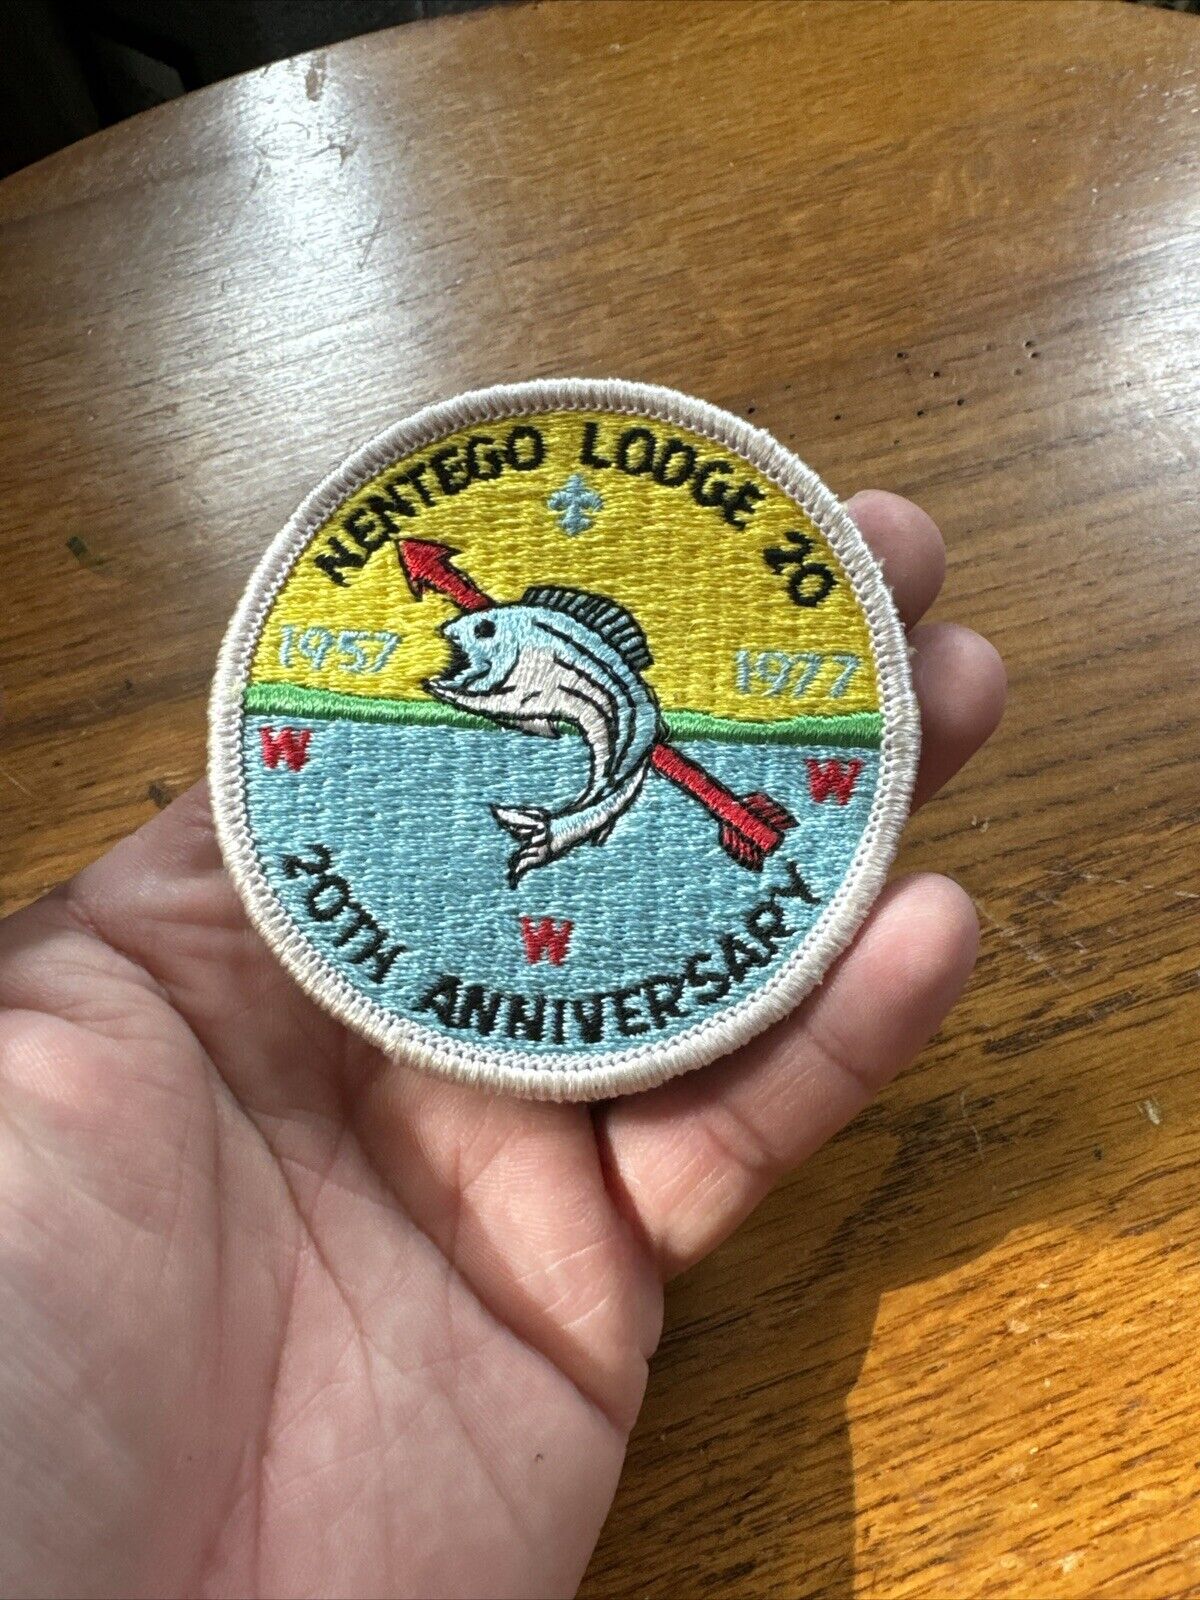 Nentego Lodge 20 1977 20th Anniversary OA patch